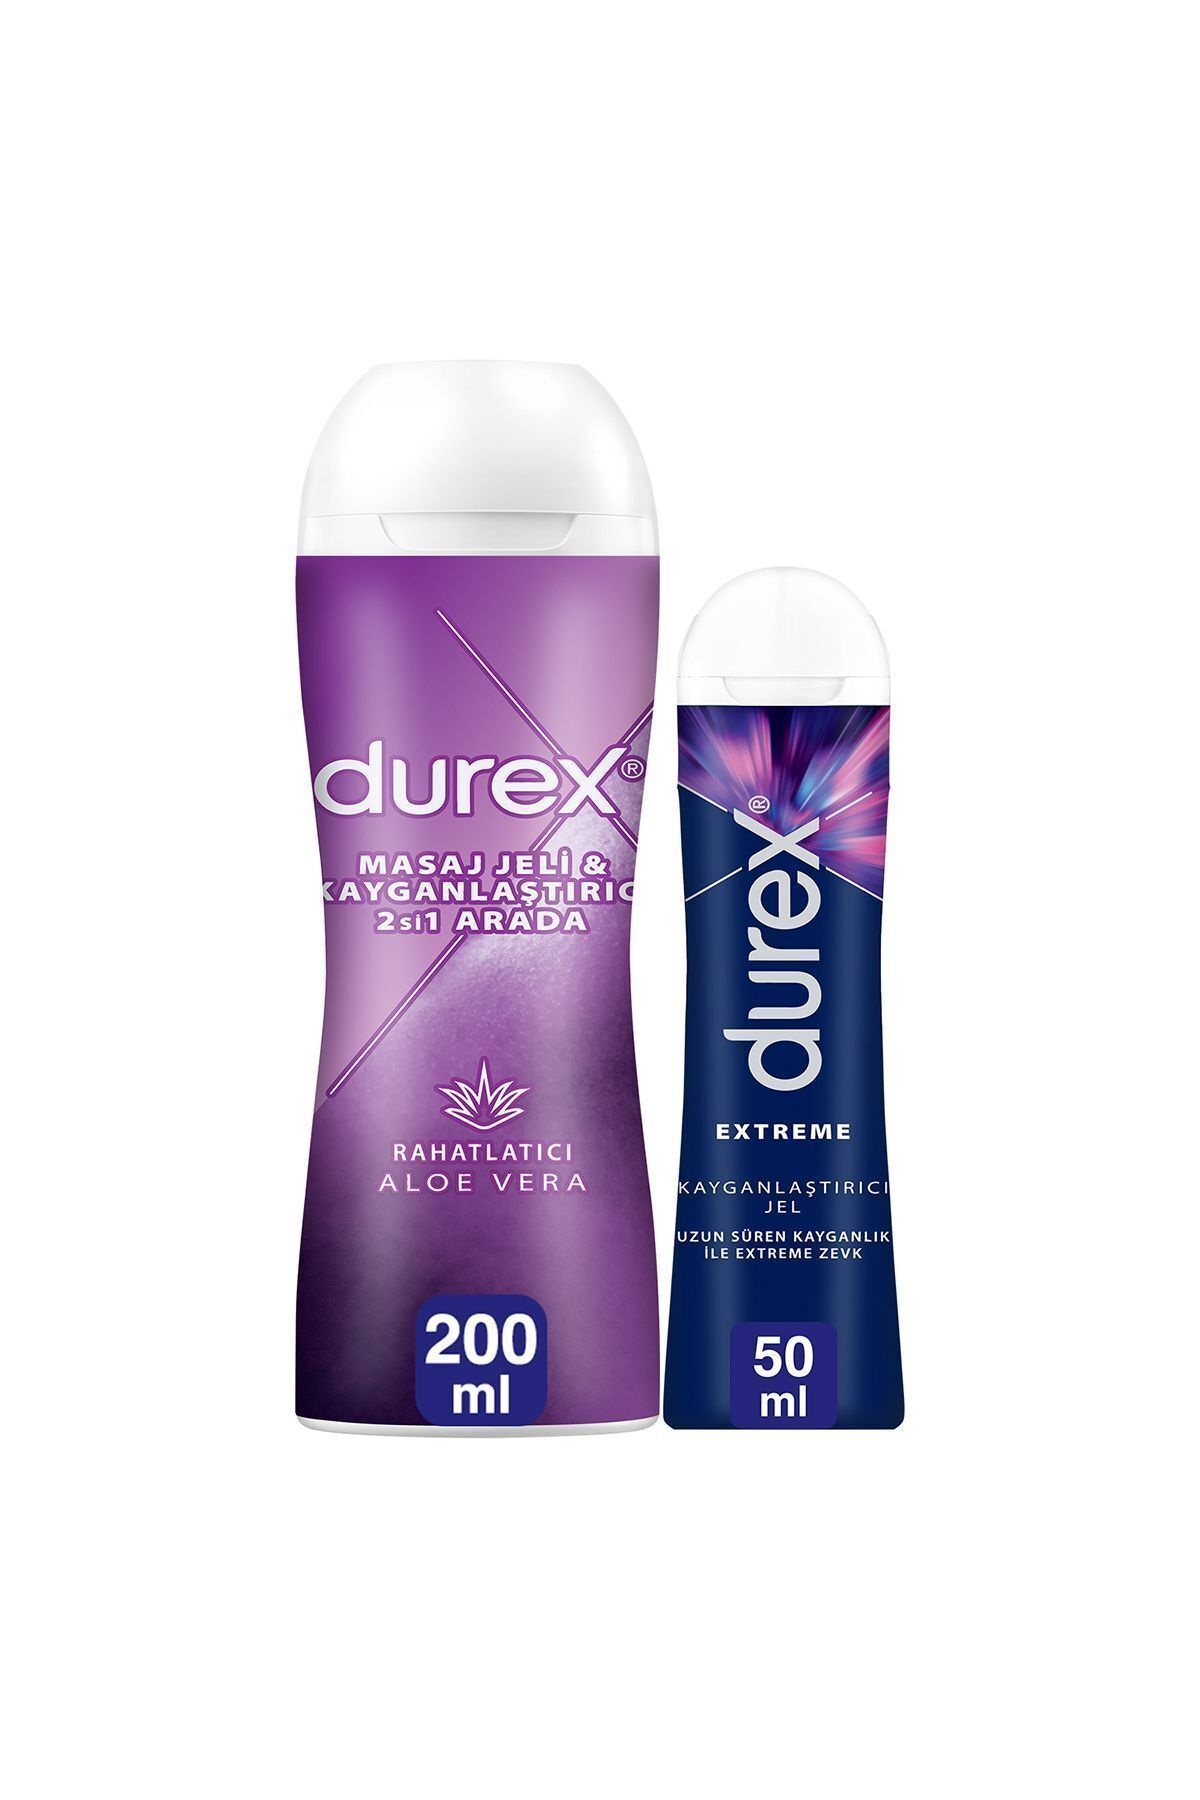 Durex Play Aloe Vera 200ml Masaj Jeli & Kayganlaştırıcı + Extreme Anal Kayganlaştırıcı Jel 50 ml